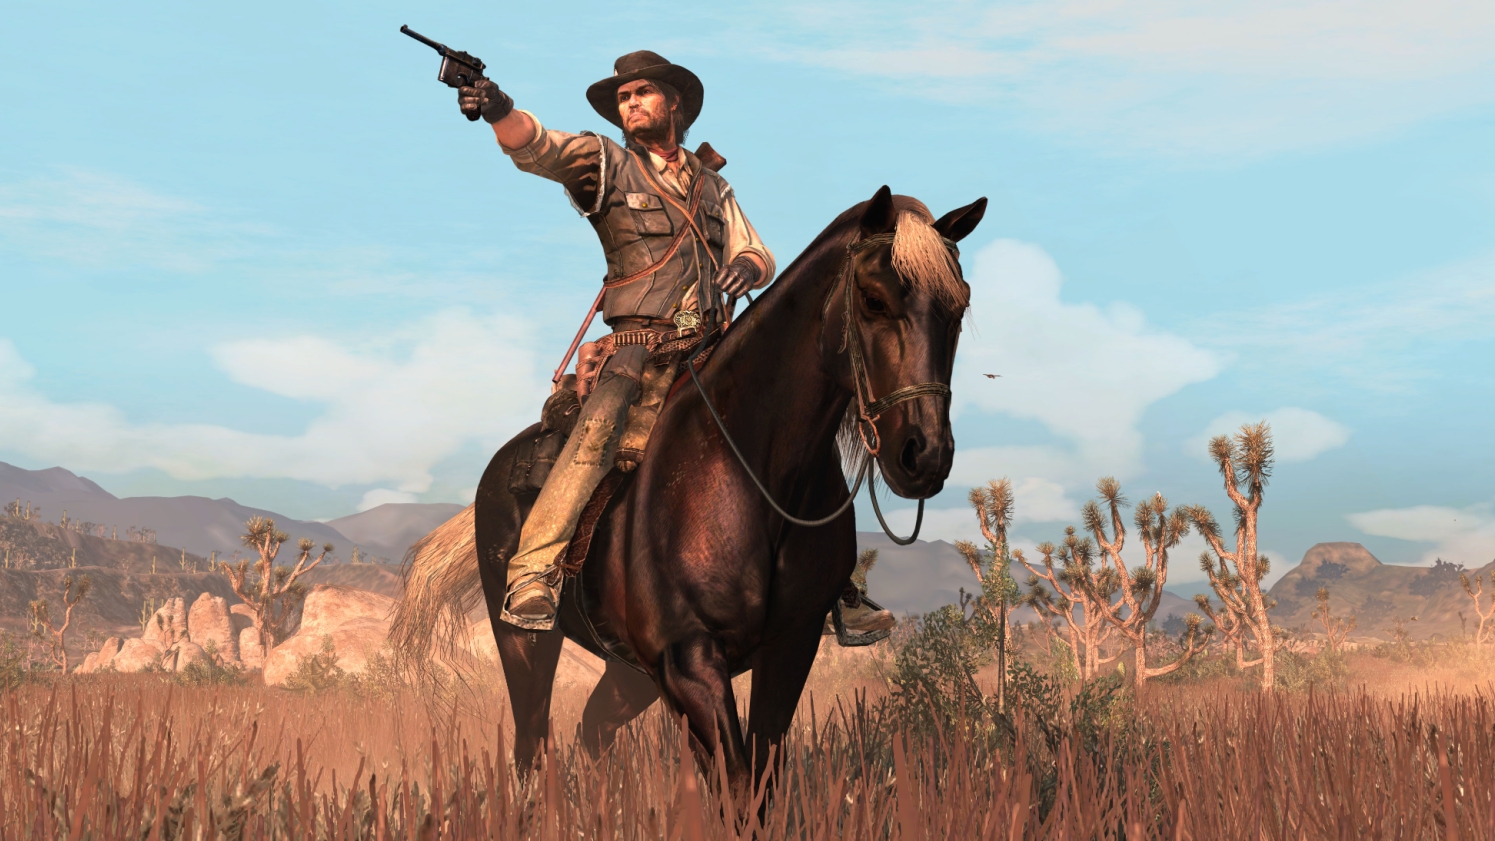 Red Dead Redemption 1 remake in development at Rockstar claims source